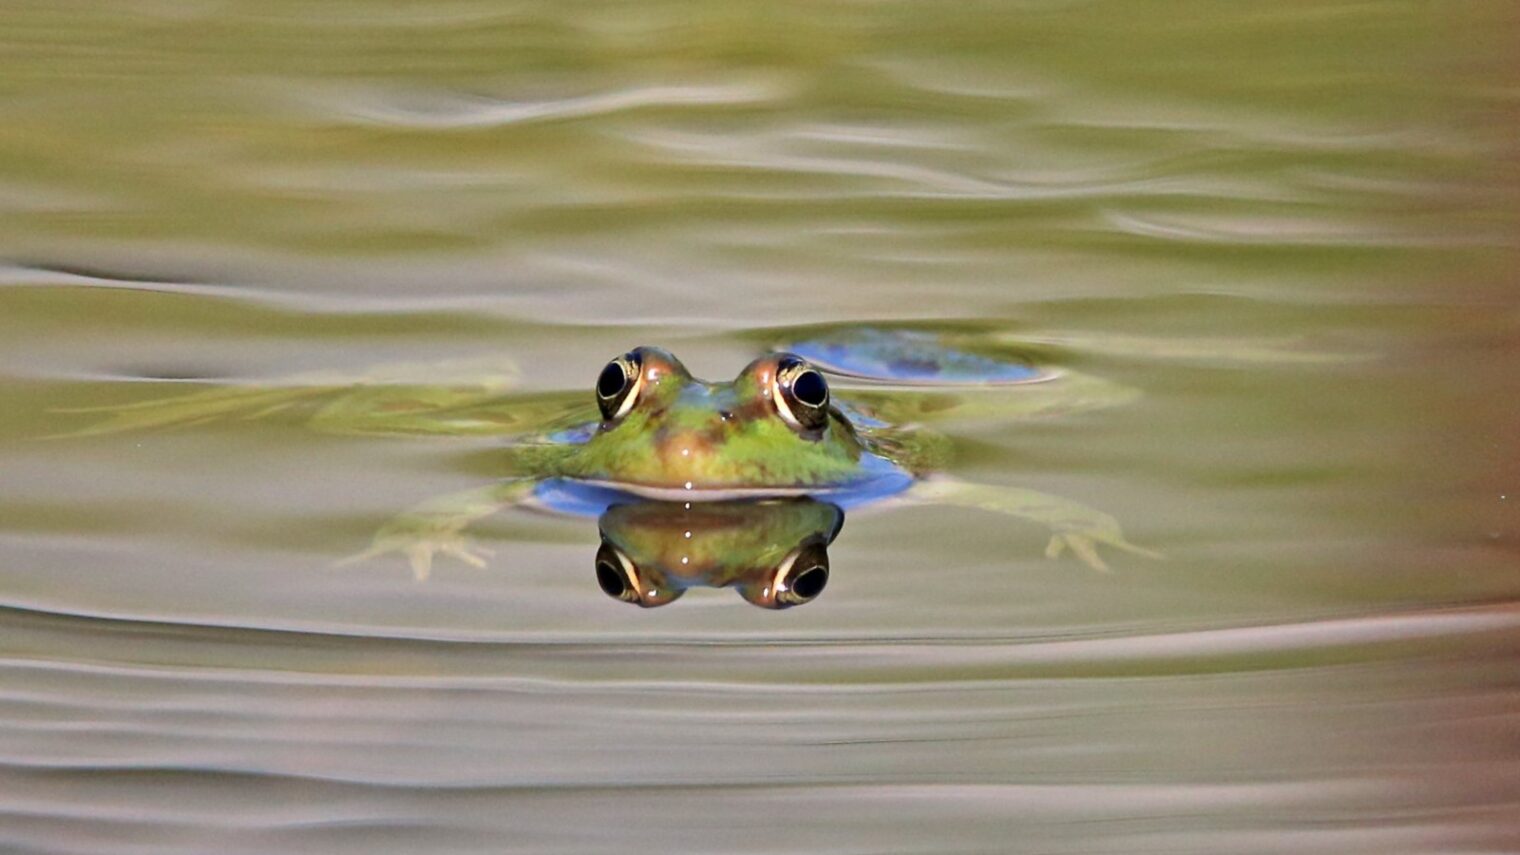 A Levant water frog enjoying a swim in Jerusalem. Photo by Haim Shohat